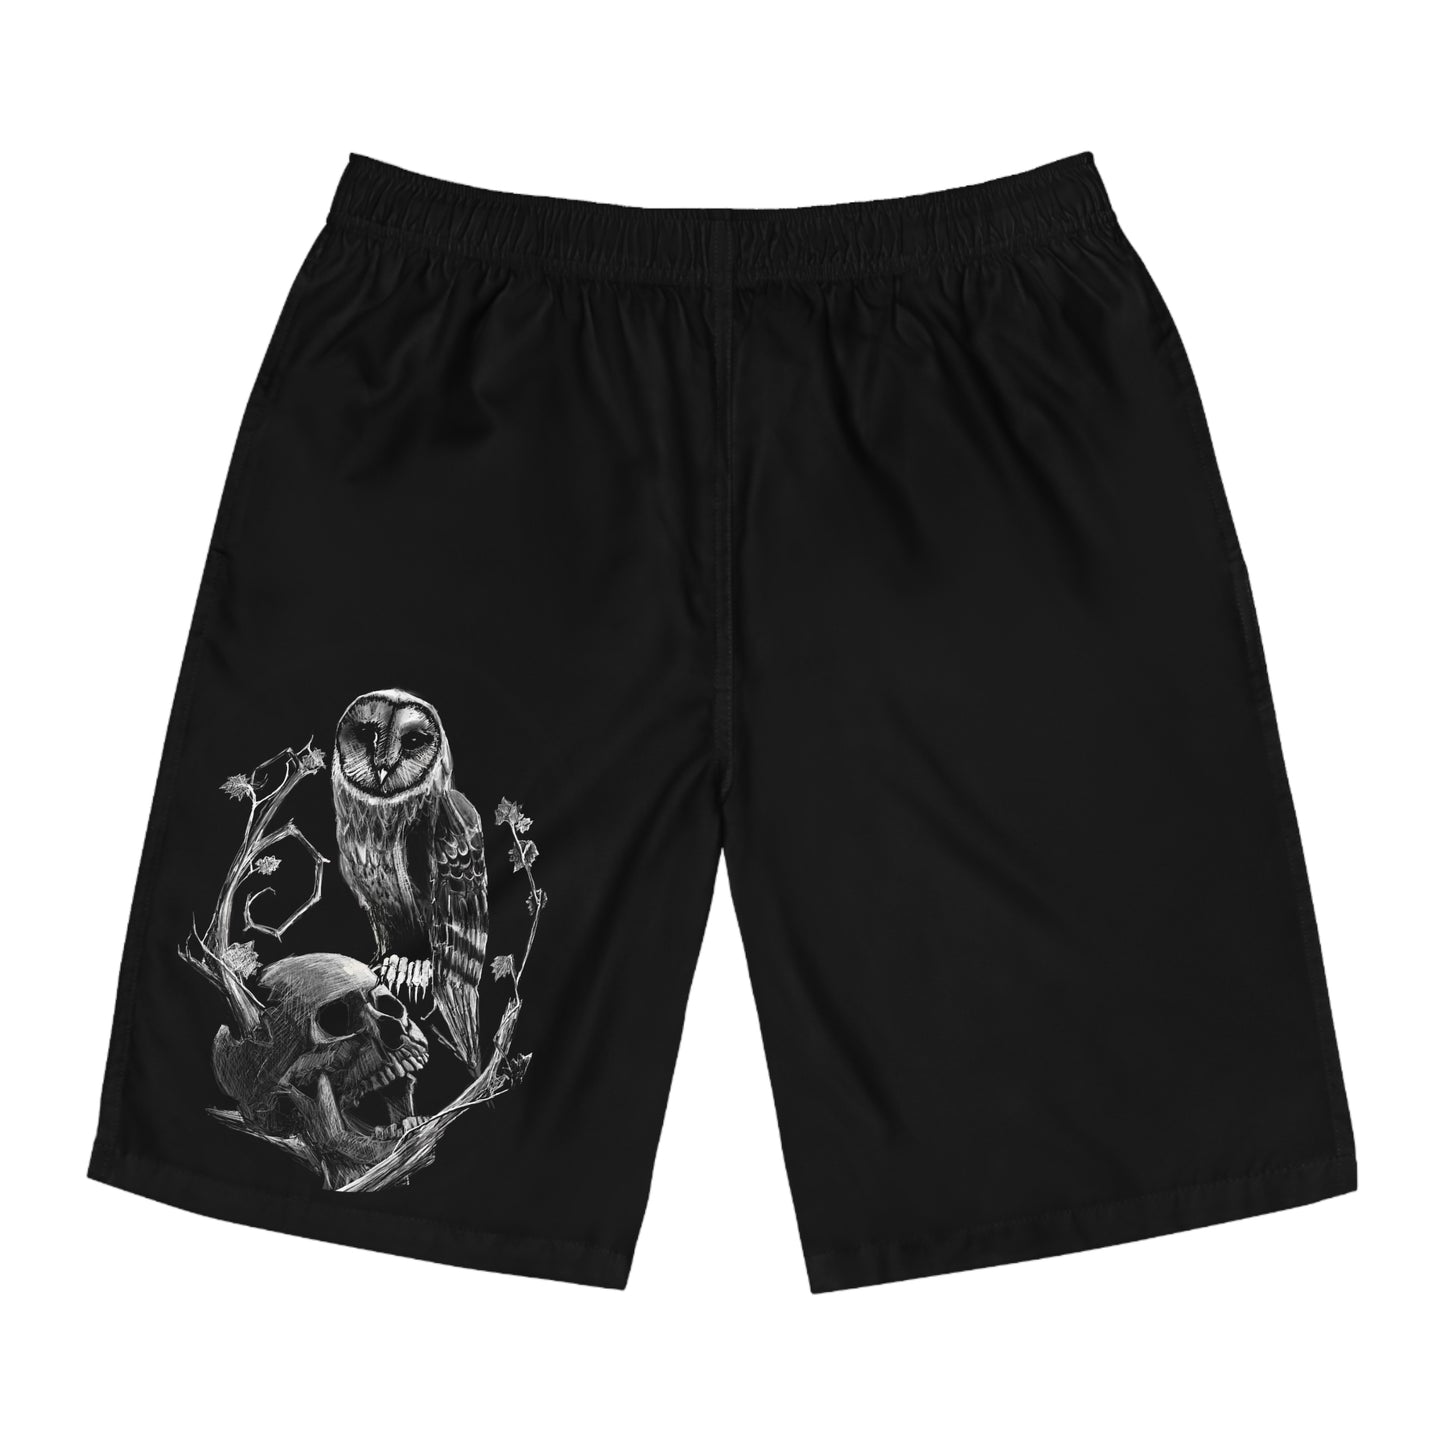 Skull and Owl Men's Board Shorts